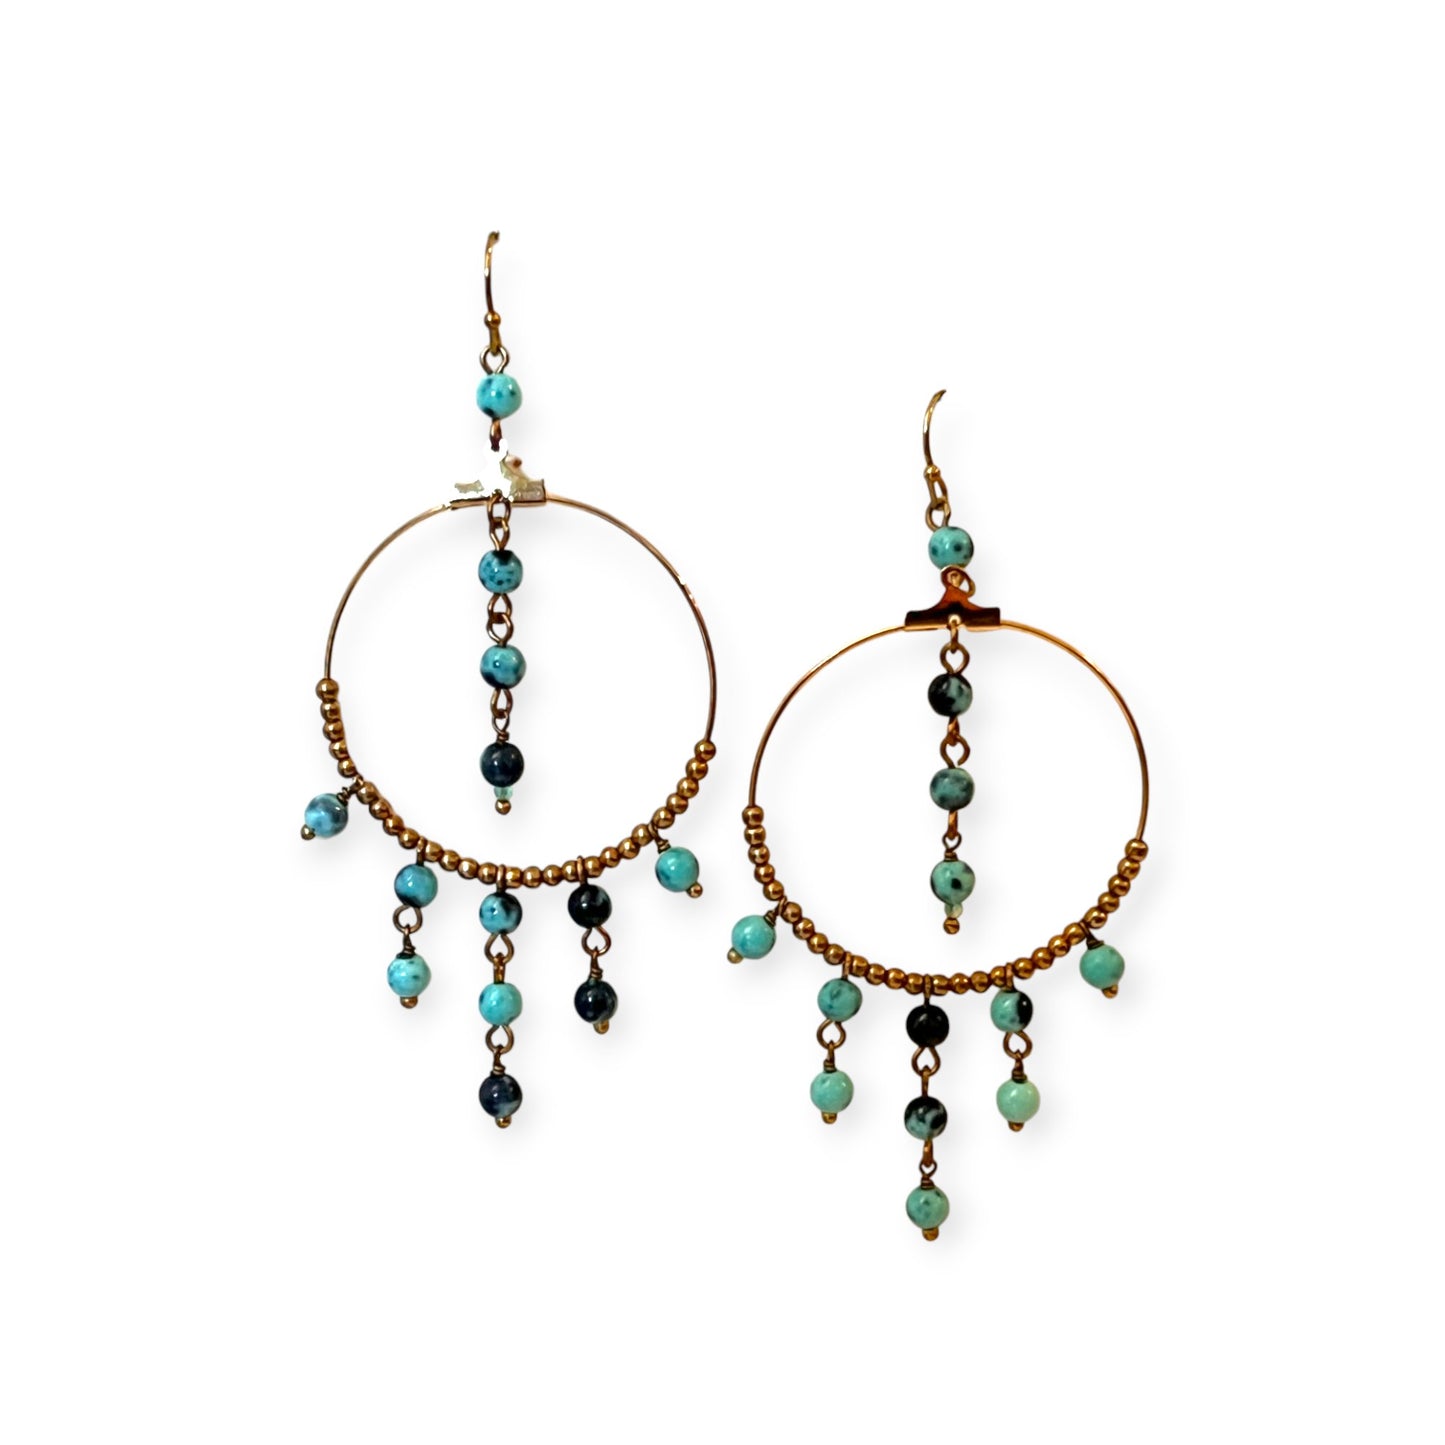 Hoop with turquoise drop earrings for a boho look - Sundara Joon